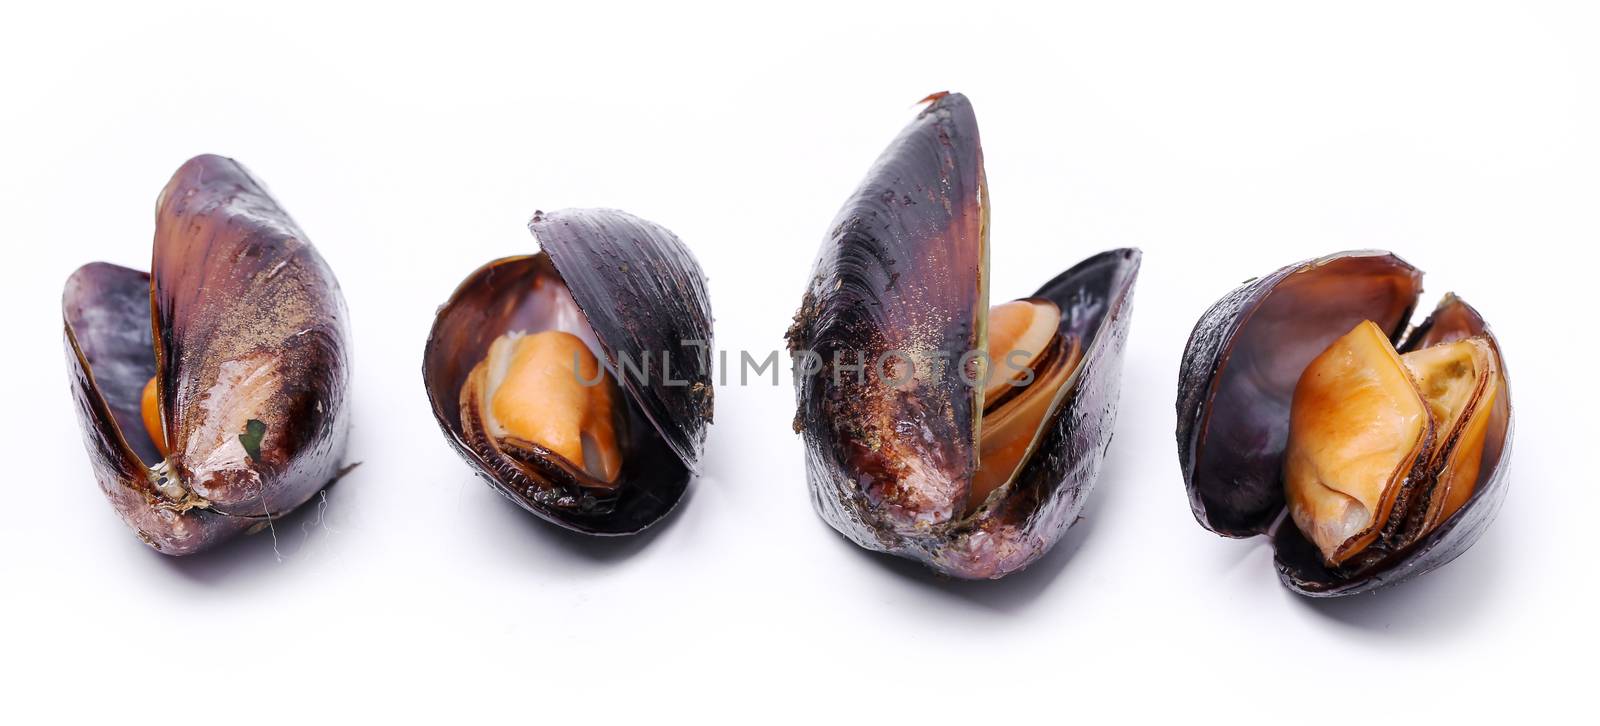 Delicious mussels by rufatjumali